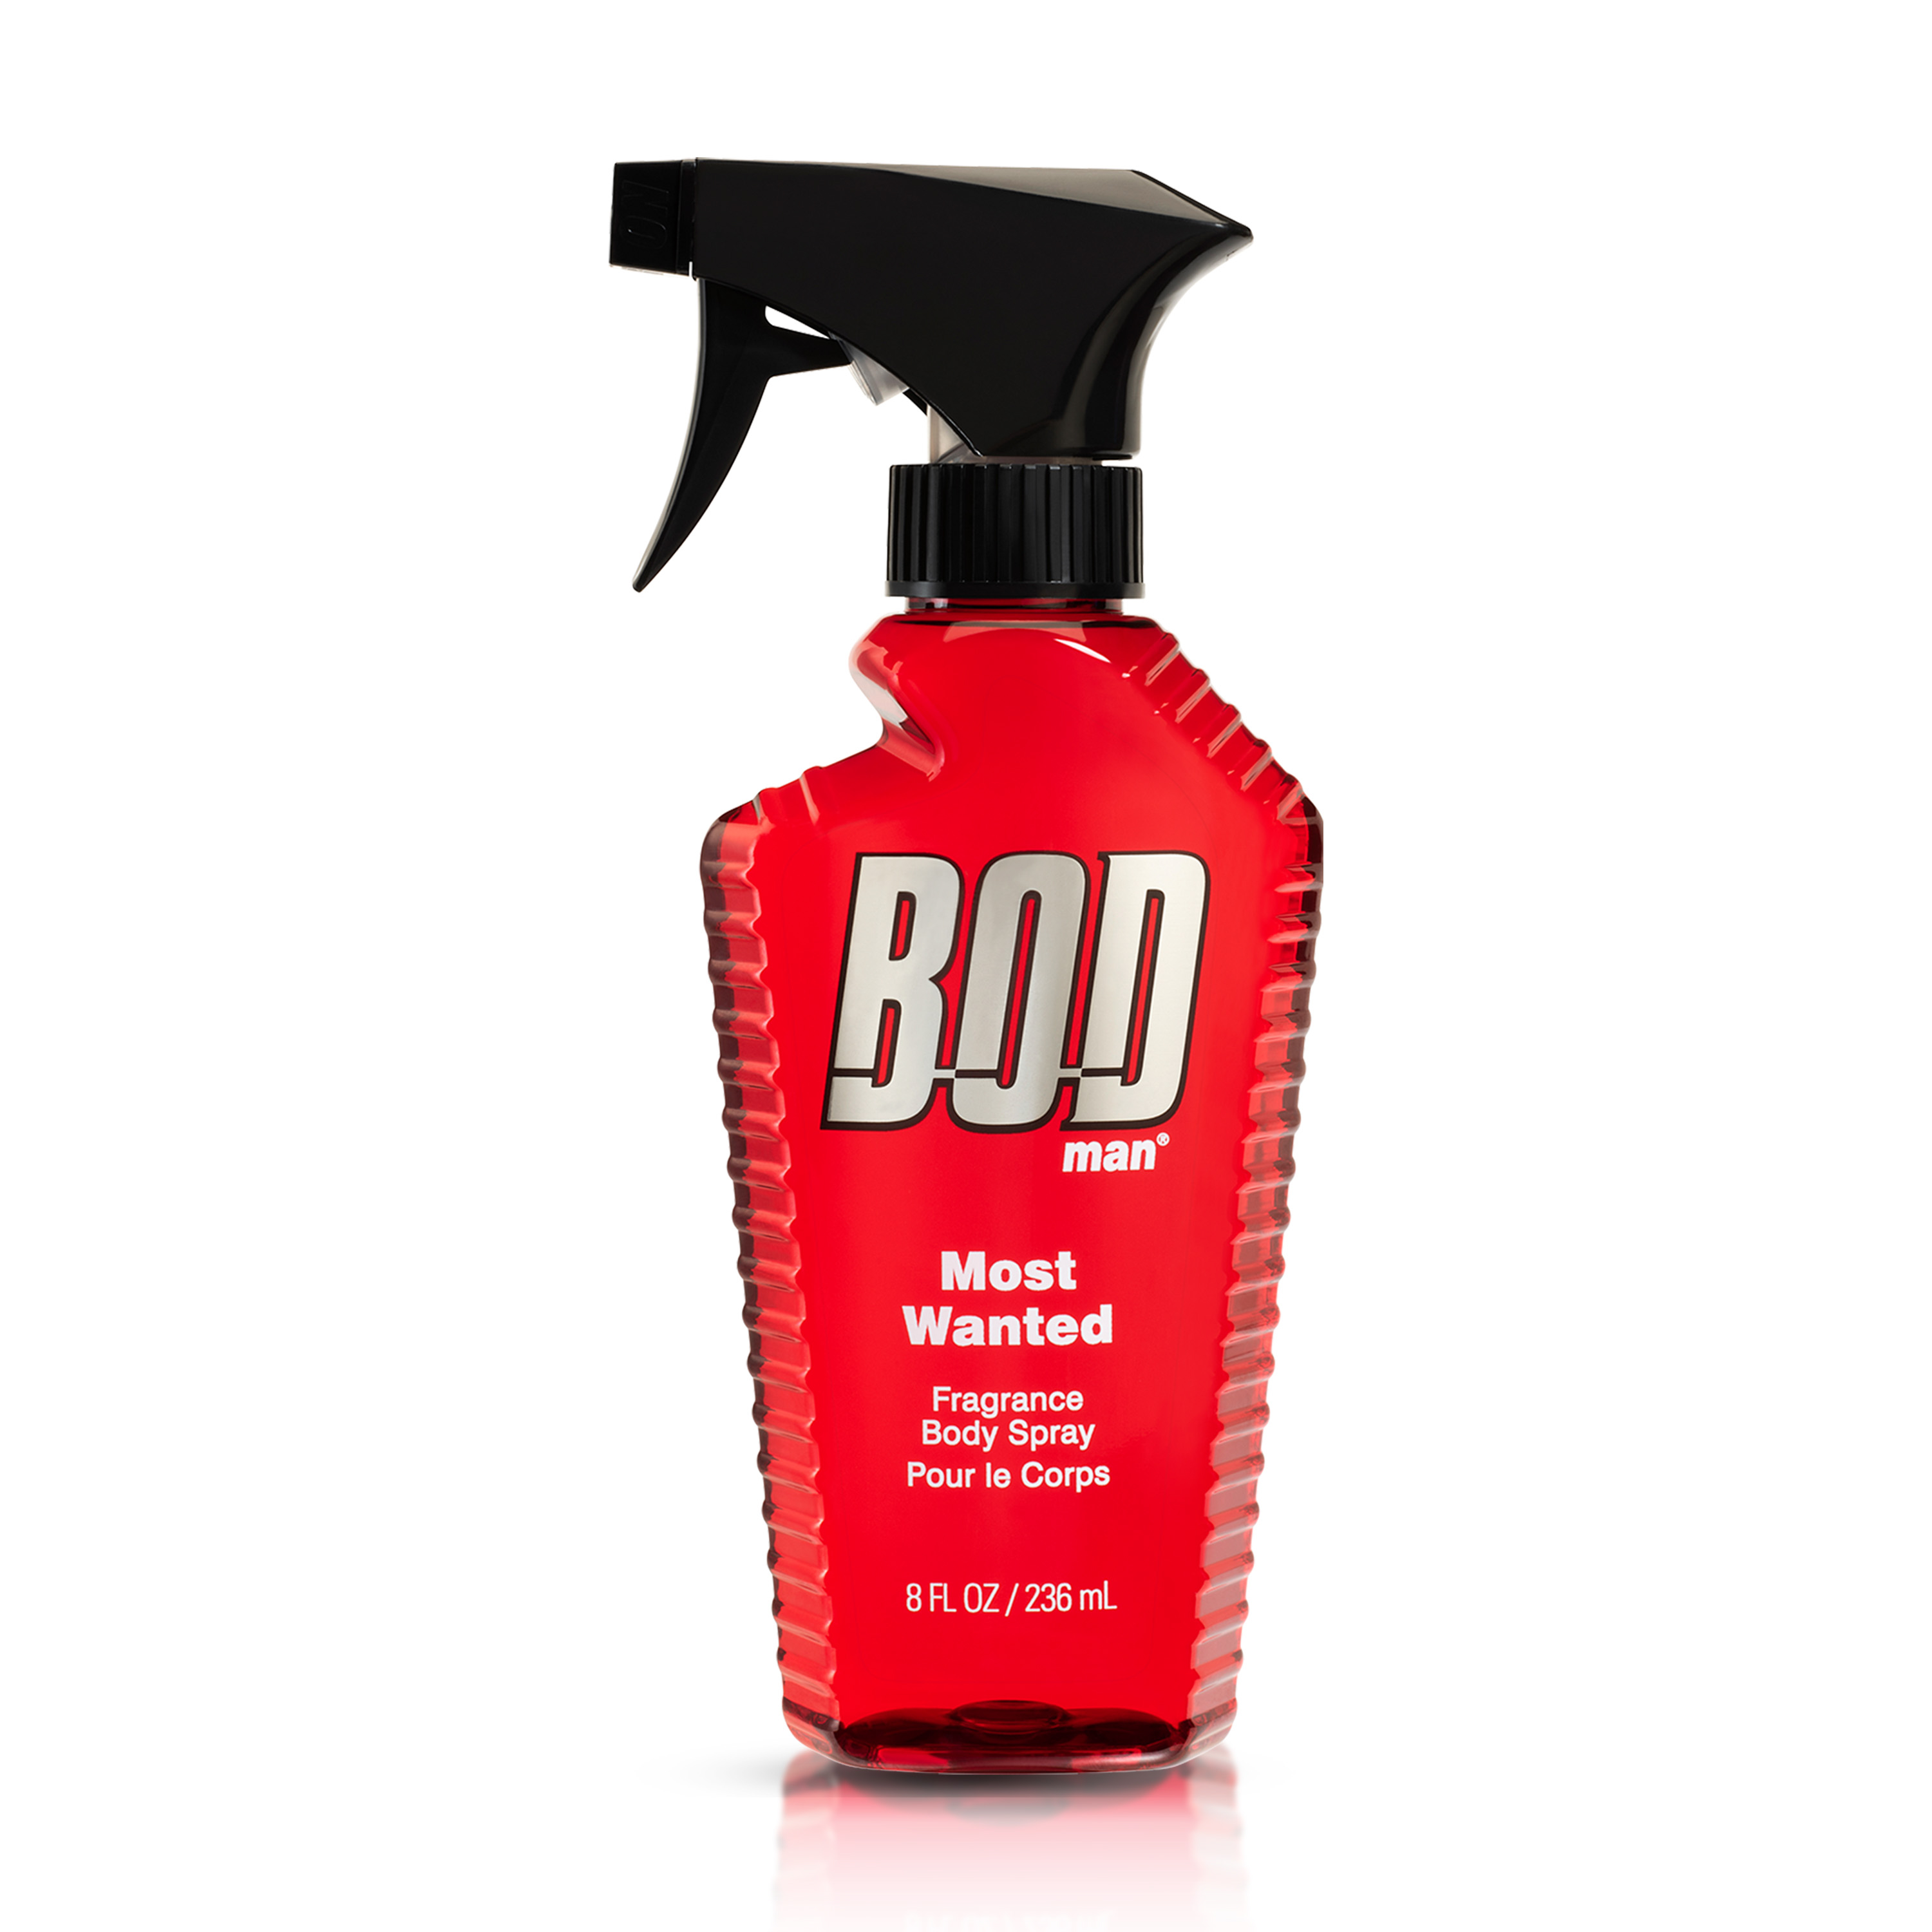 BOD Man Fragrance Body Spray, Most Wanted, 8 fl oz - image 1 of 7